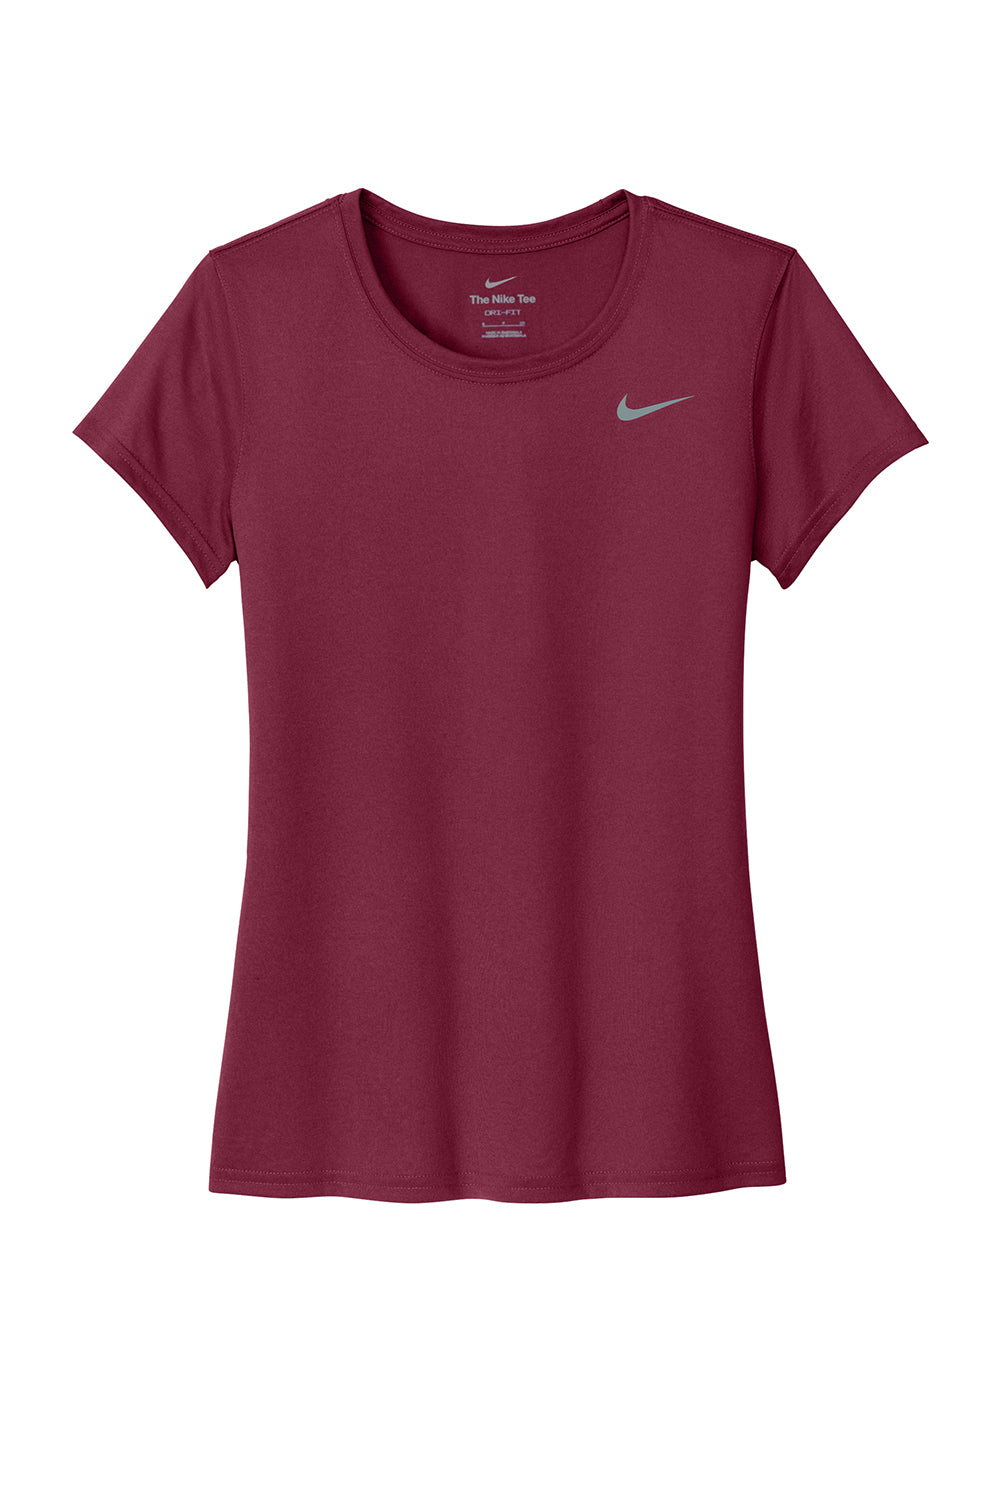 Nike DV7312 Womens Team rLegend Dri-Fit Moisture Wicking Short Sleeve Crewneck T-Shirt Team Maroon Flat Front